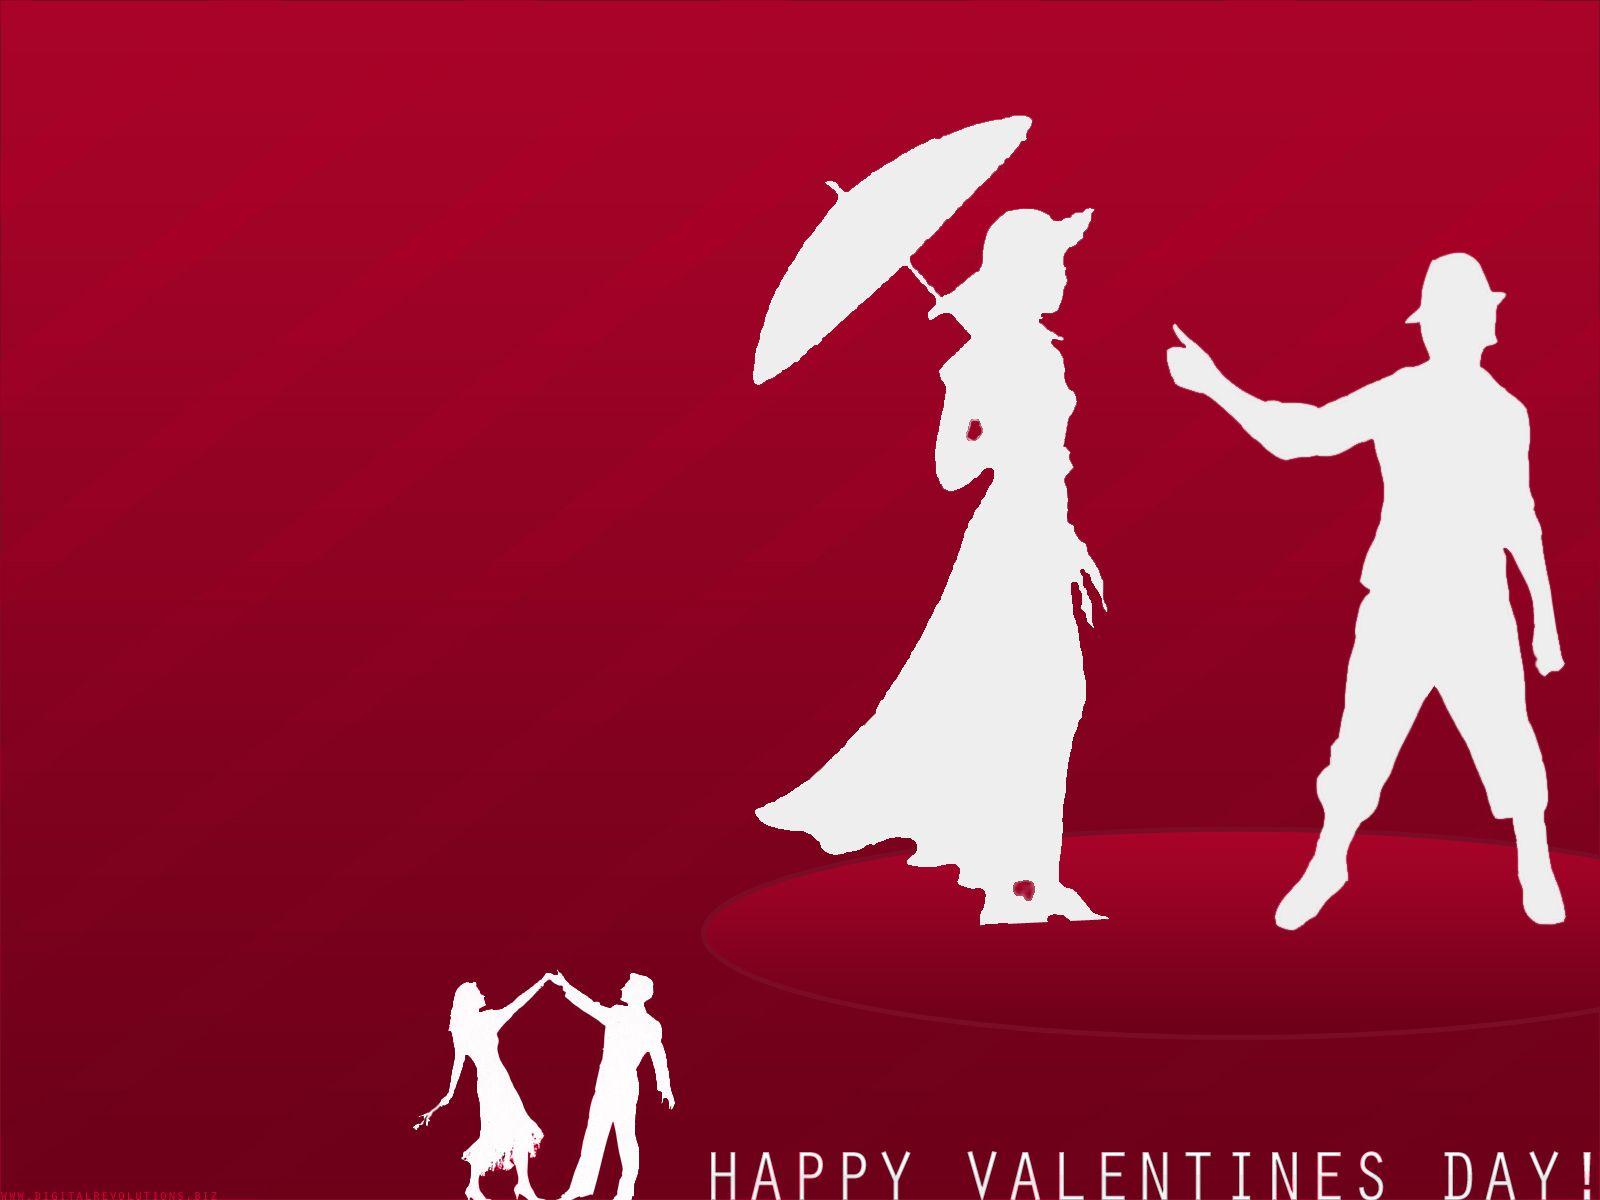 Happy Valentines Day 2015 Wallpaper